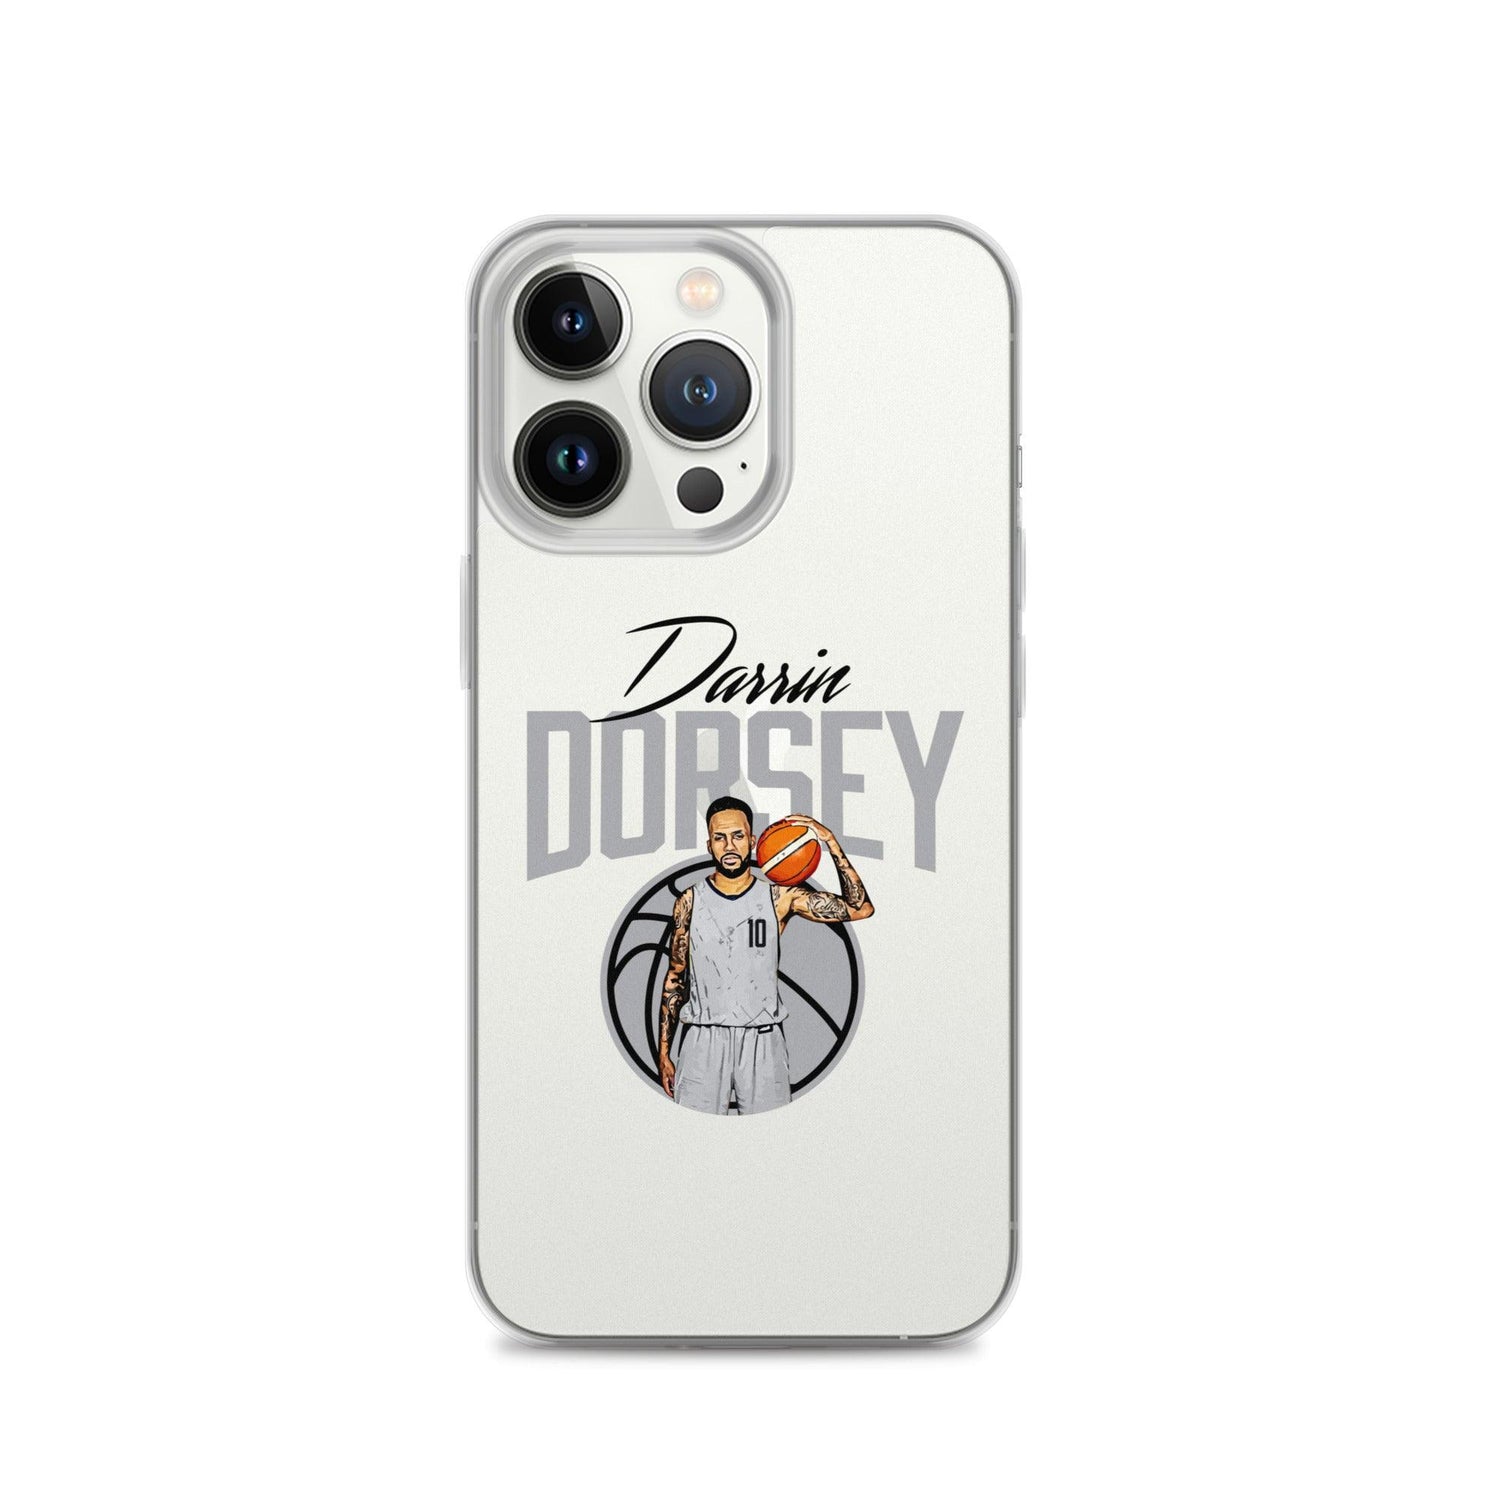 Darrin Dorsey "Gameday" iPhone Case - Fan Arch